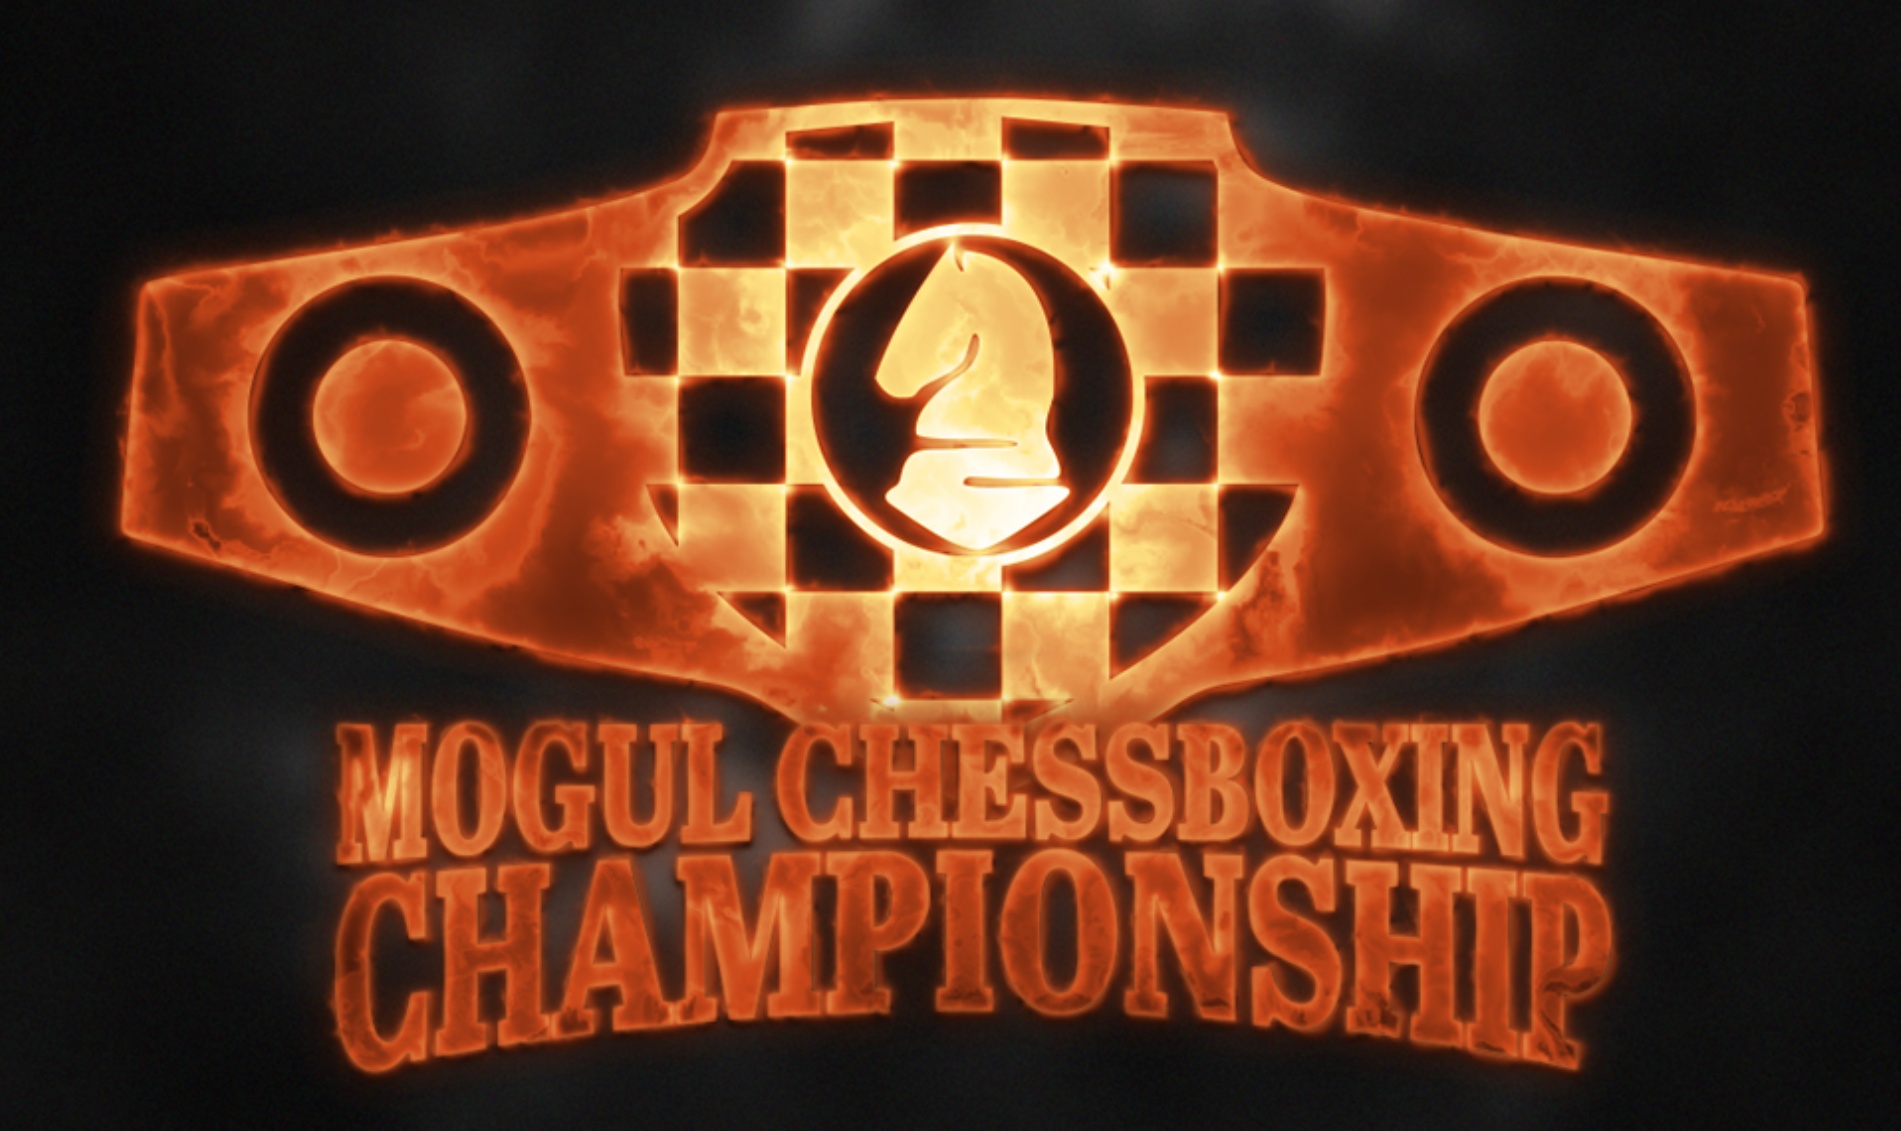 Mogul Chessboxing Championship